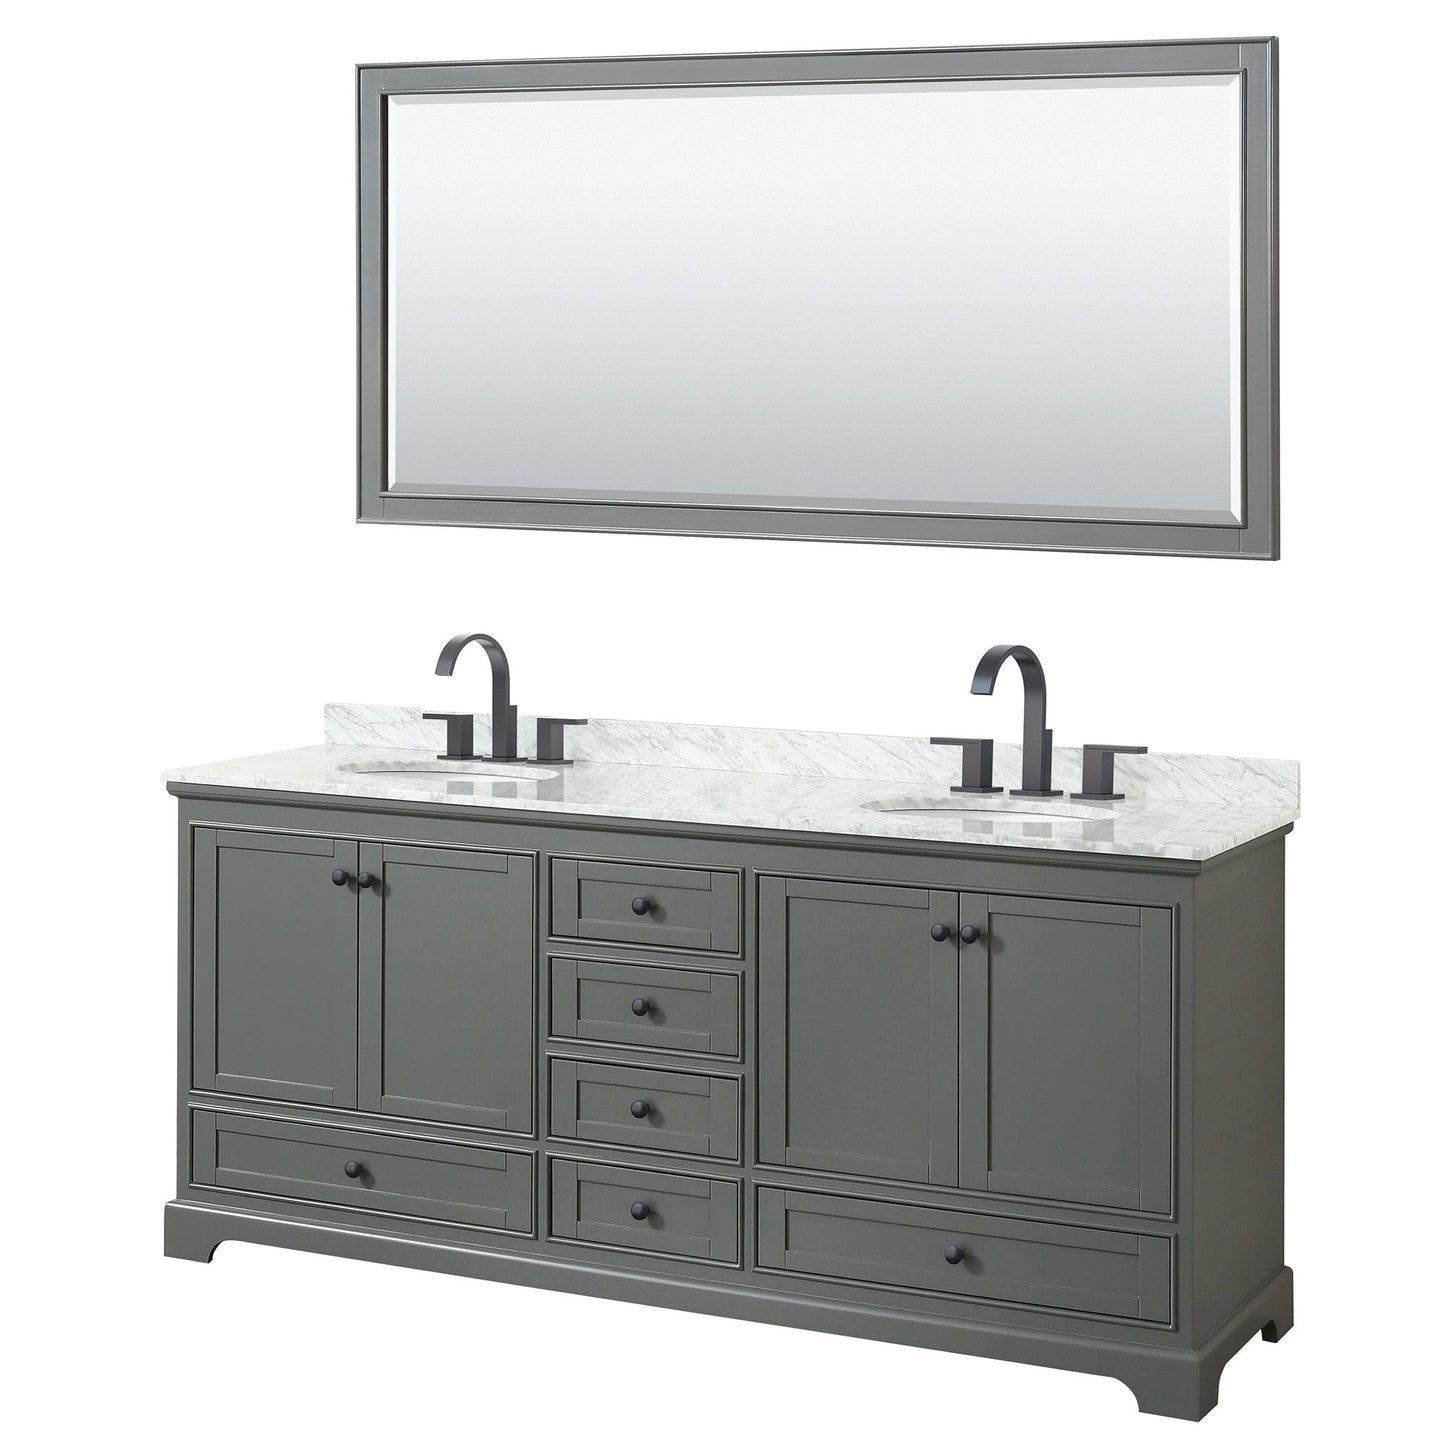 Deborah 80" Double Bathroom Vanity in Dark Gray, White Carrara Marble Countertop, Undermount Oval Sinks, Matte Black Trim, 70" Mirror